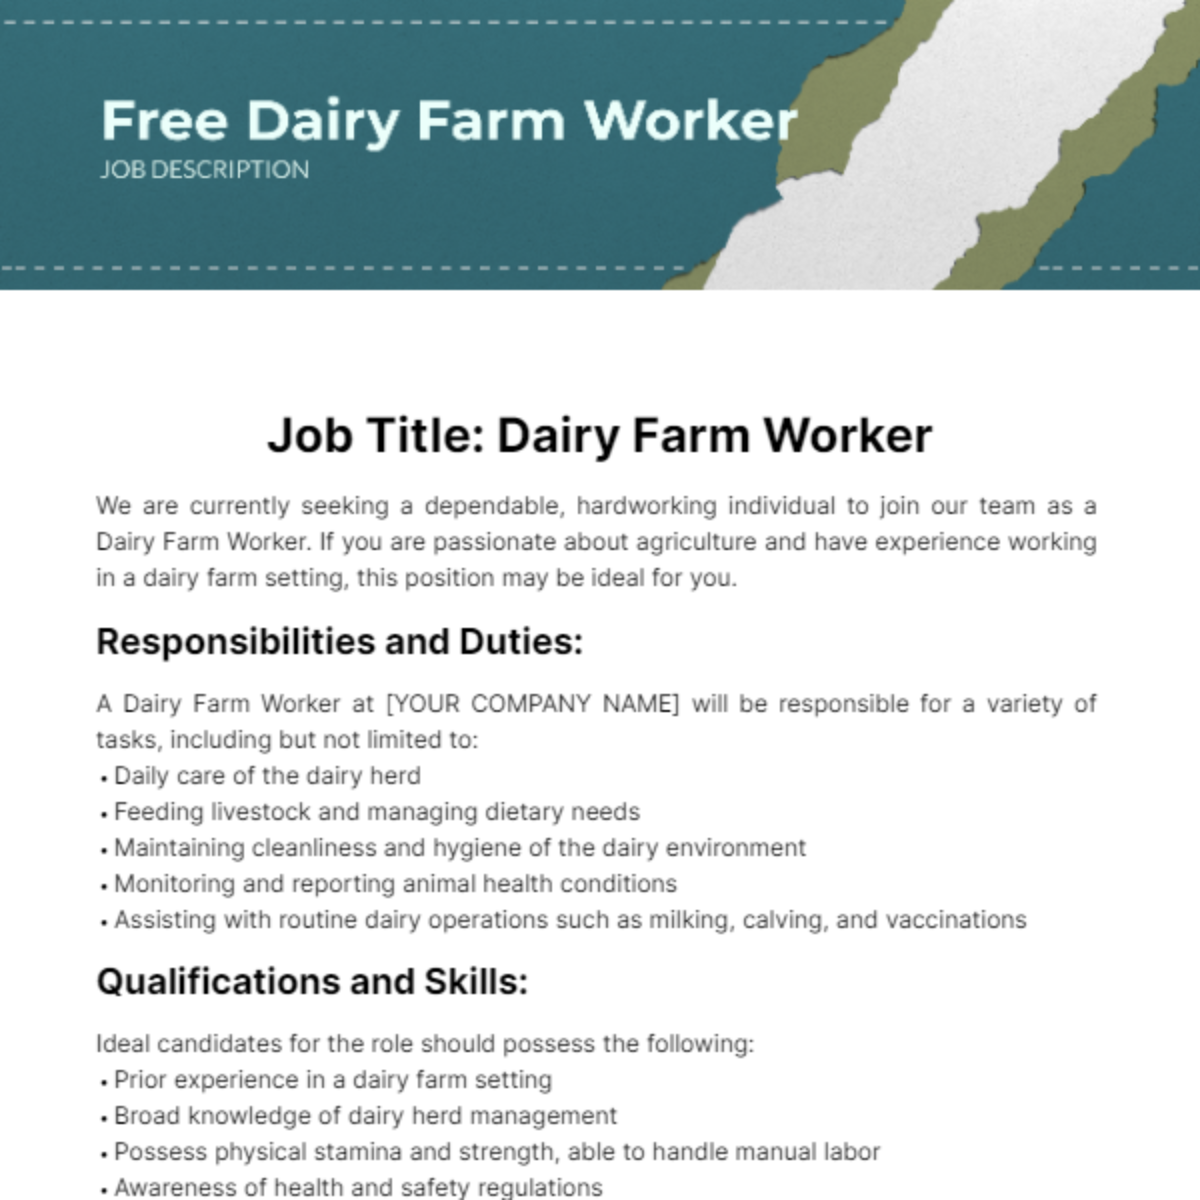 Free Dairy Farm Worker Job Description Template